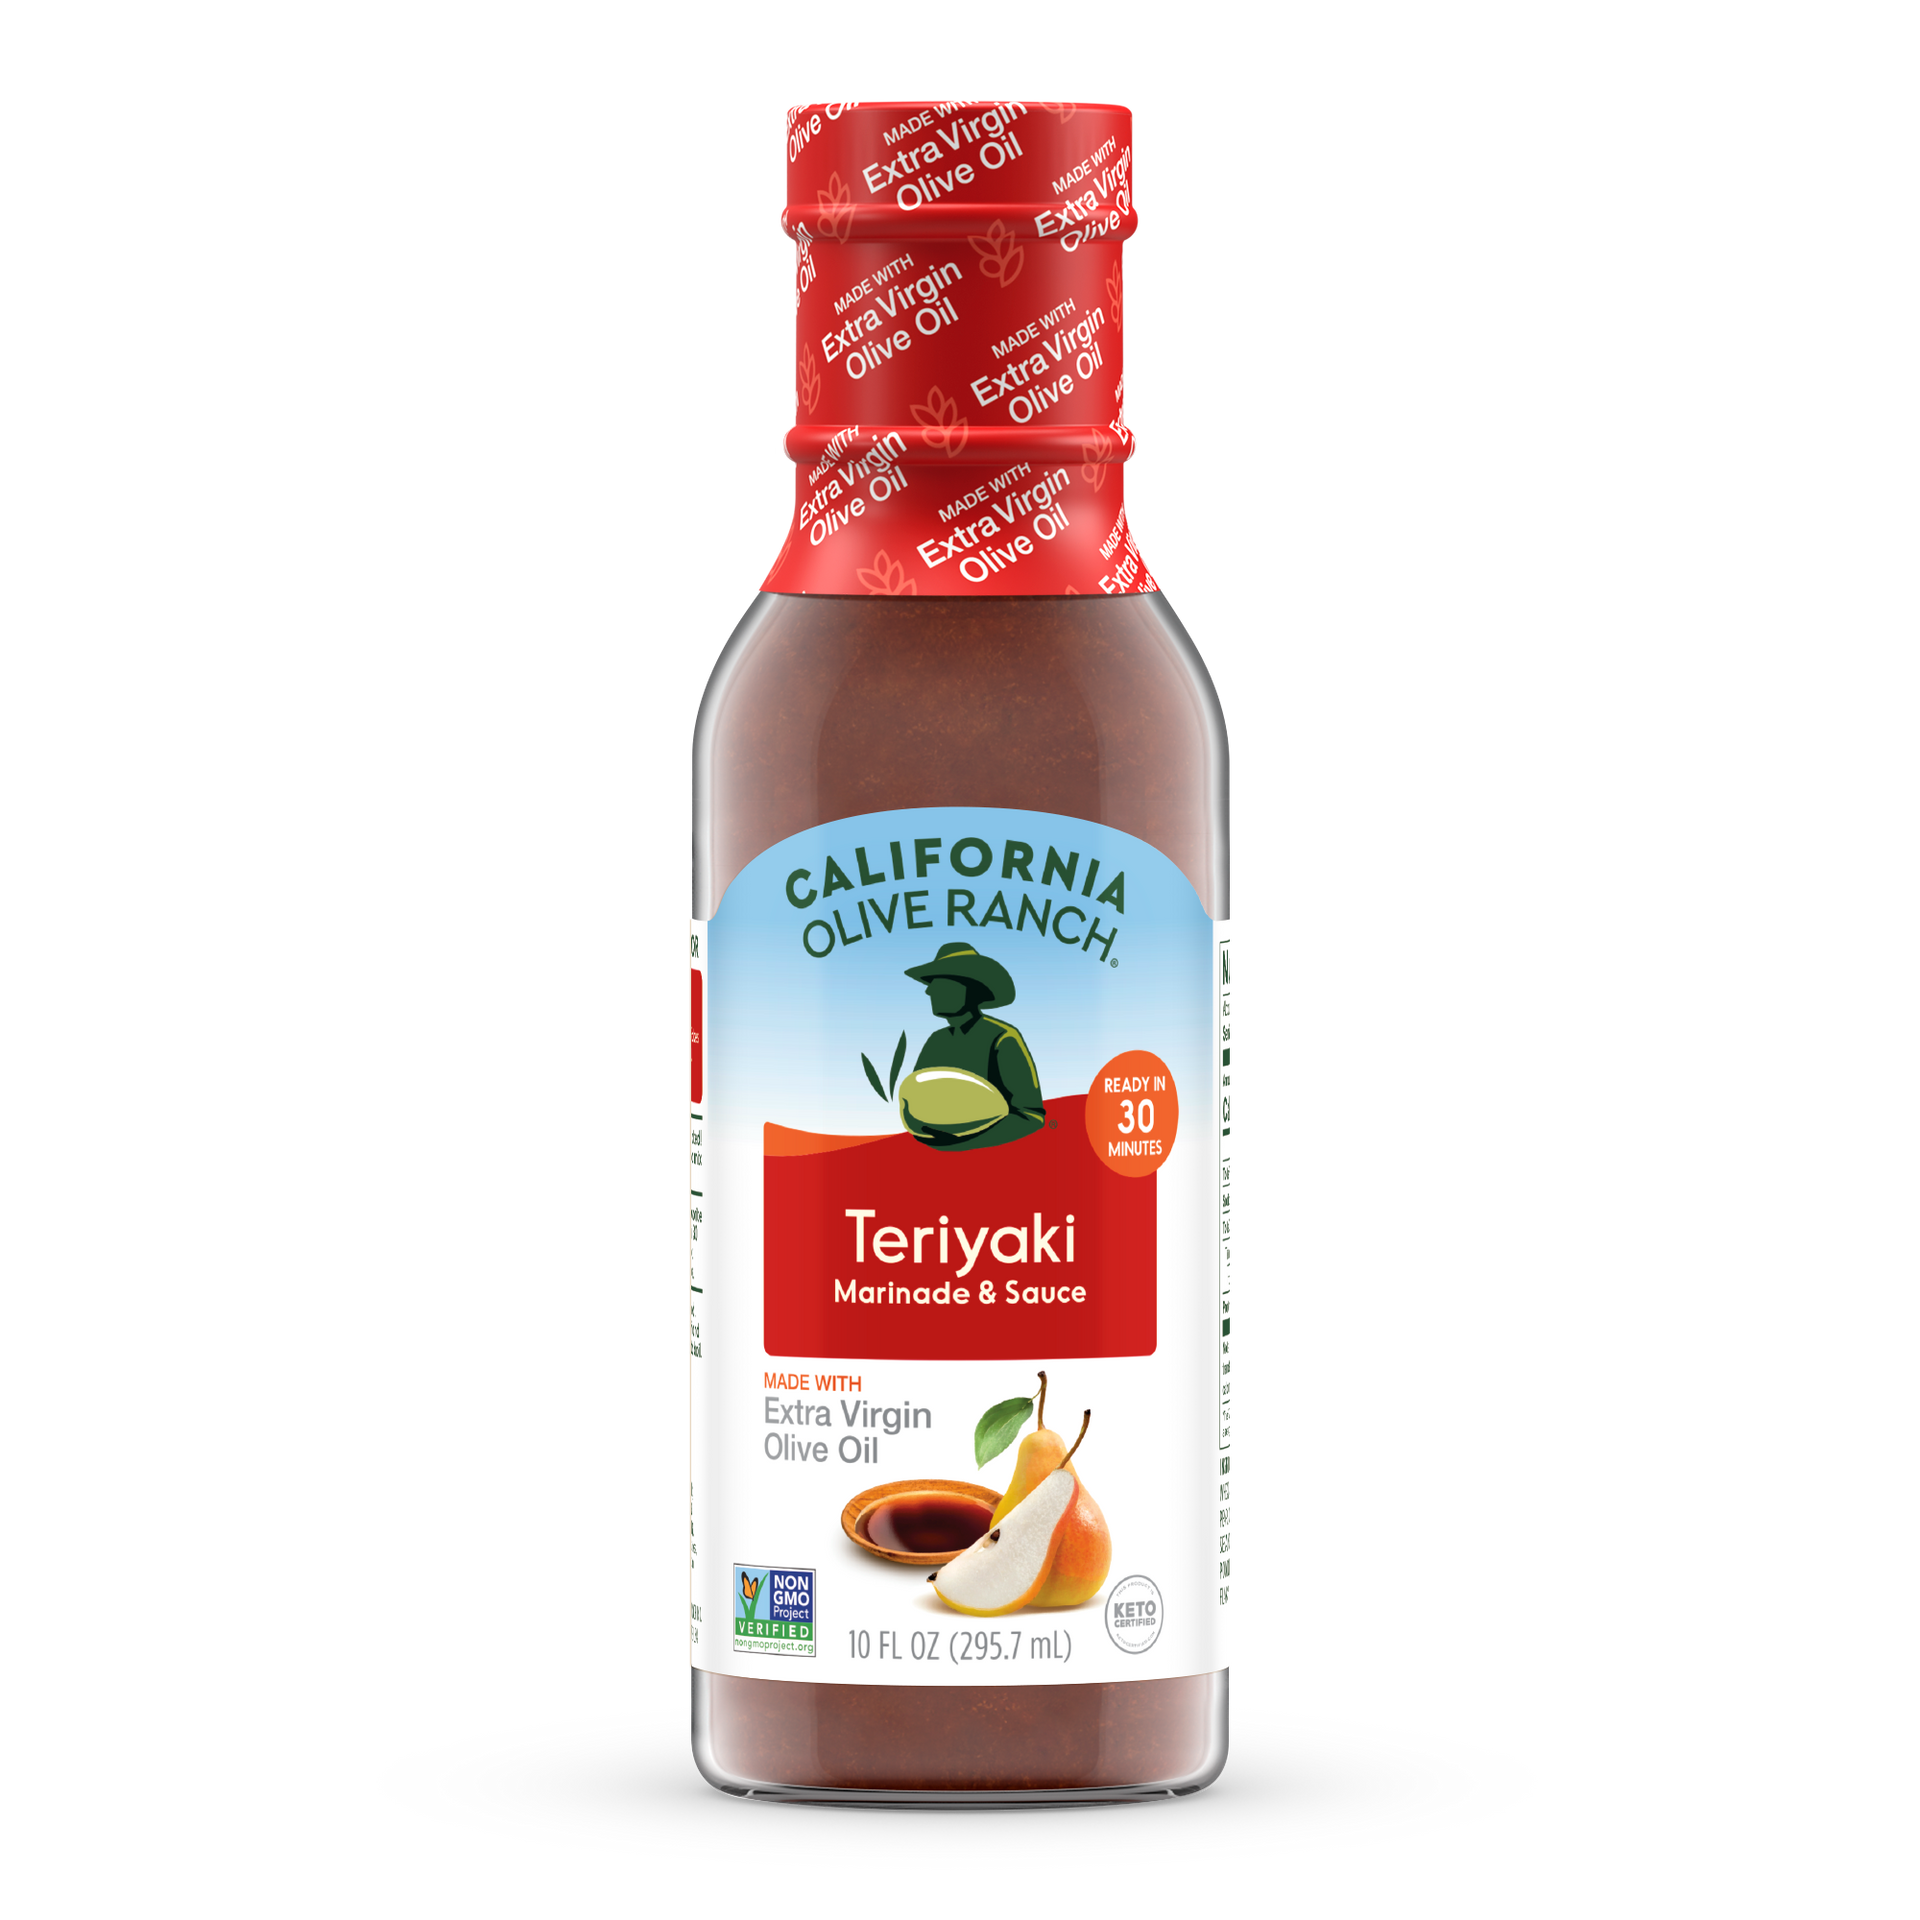 Teriyaki Marinade & Sauce product packaging